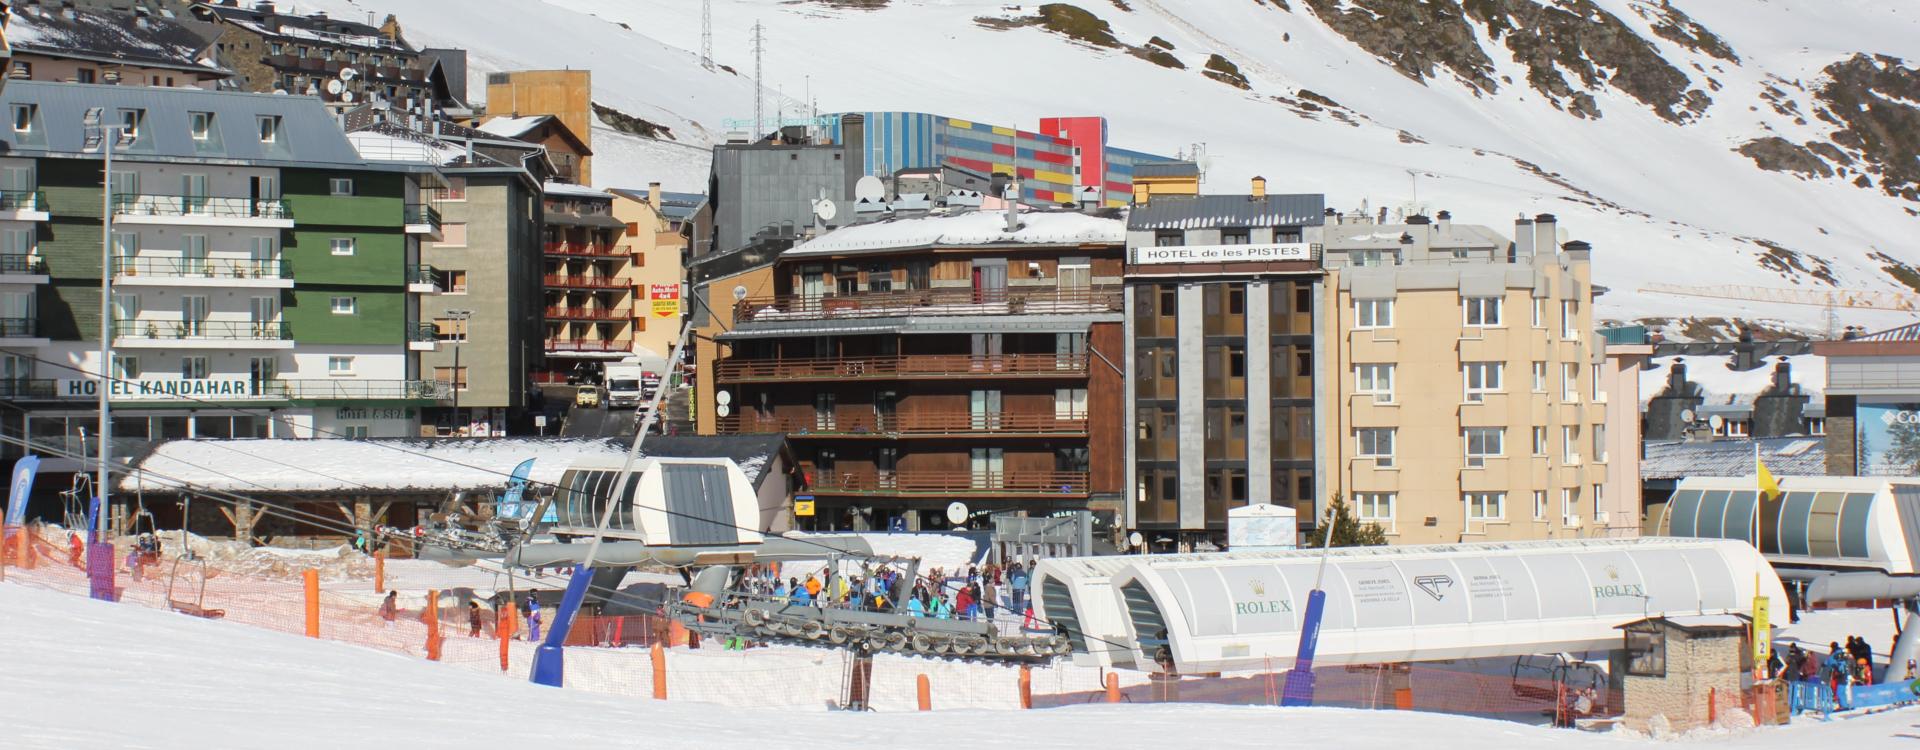 Hotel next to the ski slopes in Pas de la Casa